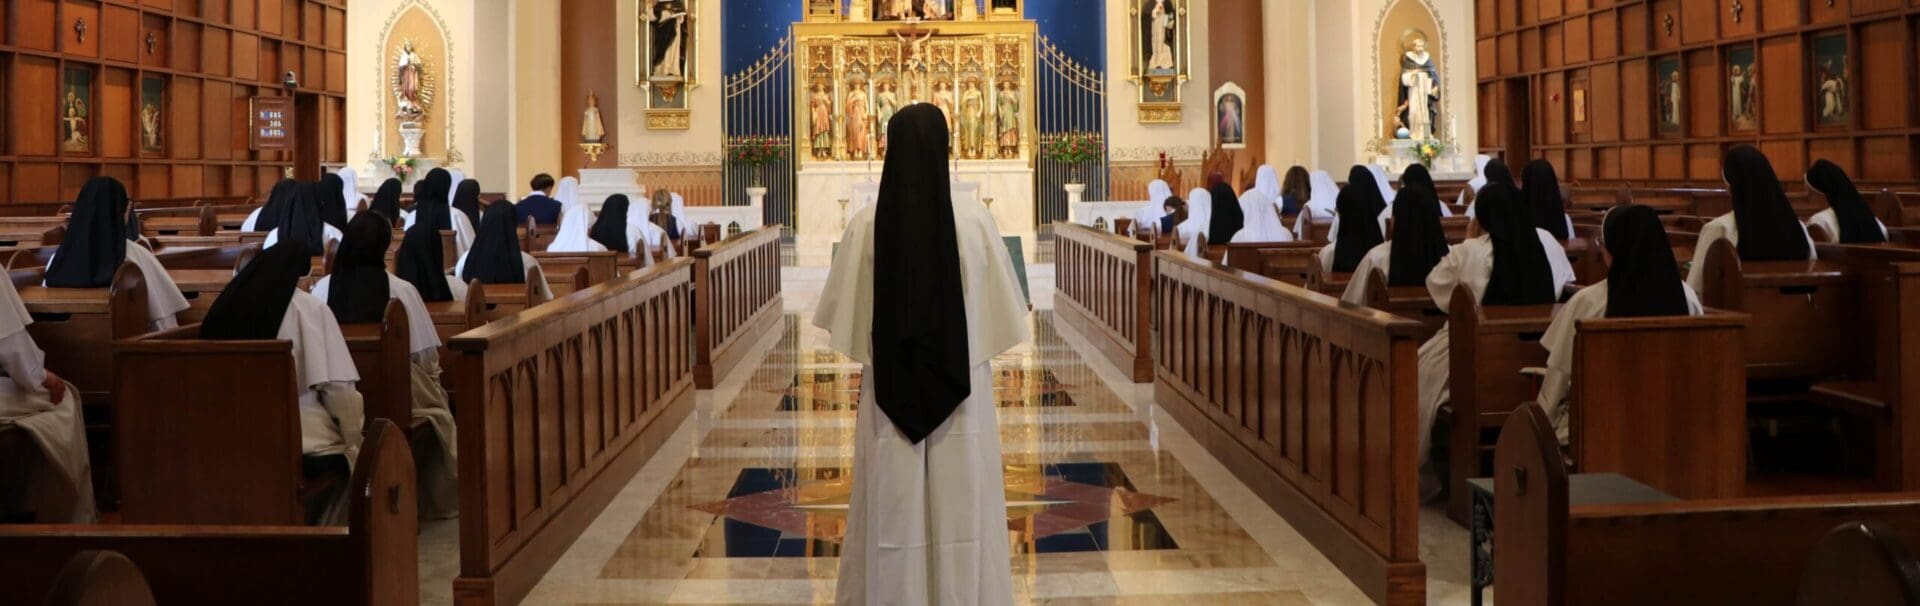 dominican sisters catholic religious vocations women prayer faith Mater Eucharistiae Chapel